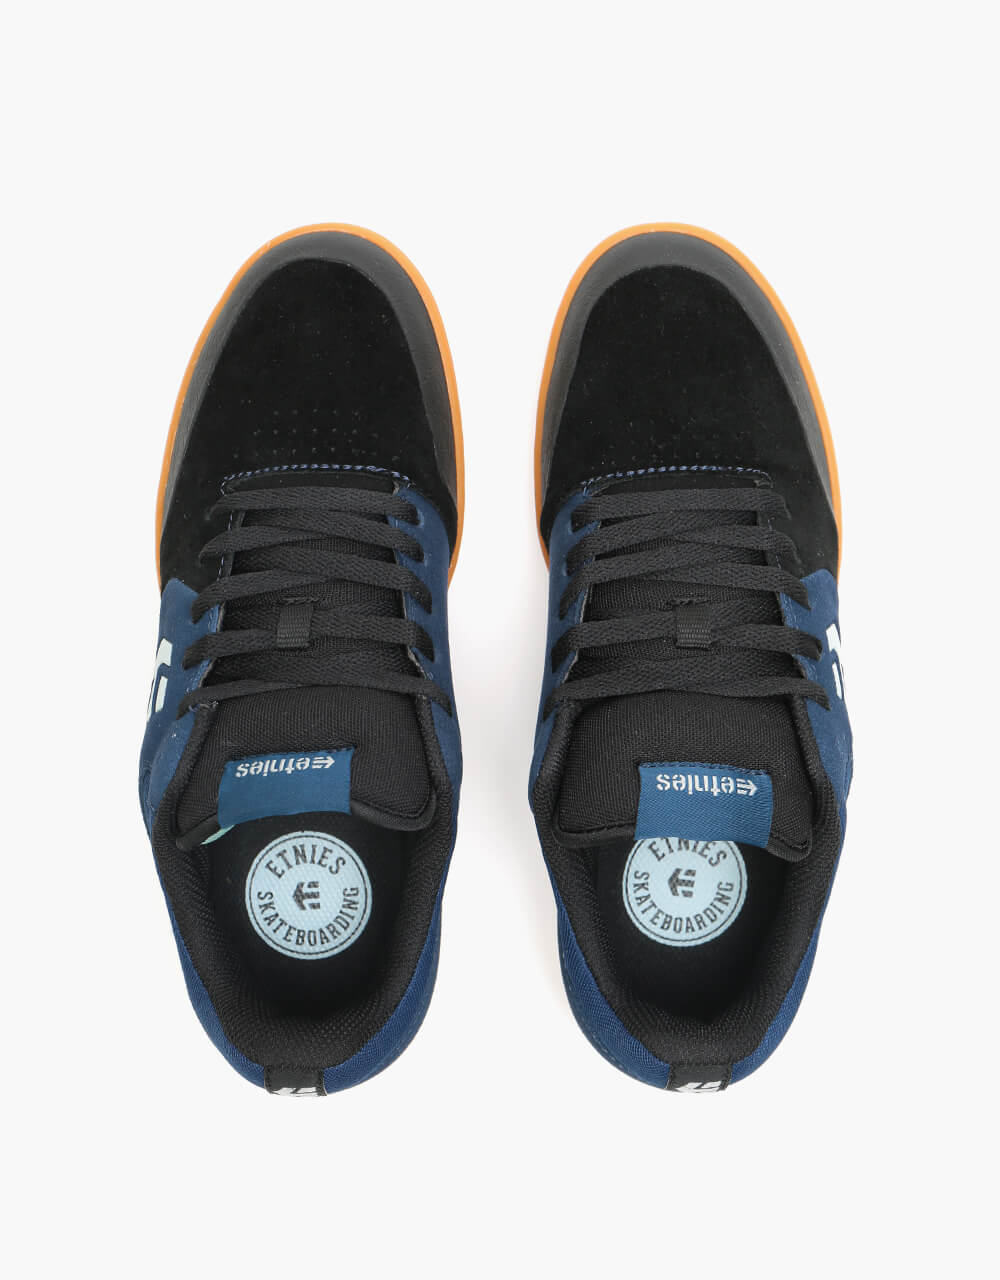 Etnies x Michelin Marana Skate Shoes - Black/Grey/Blue